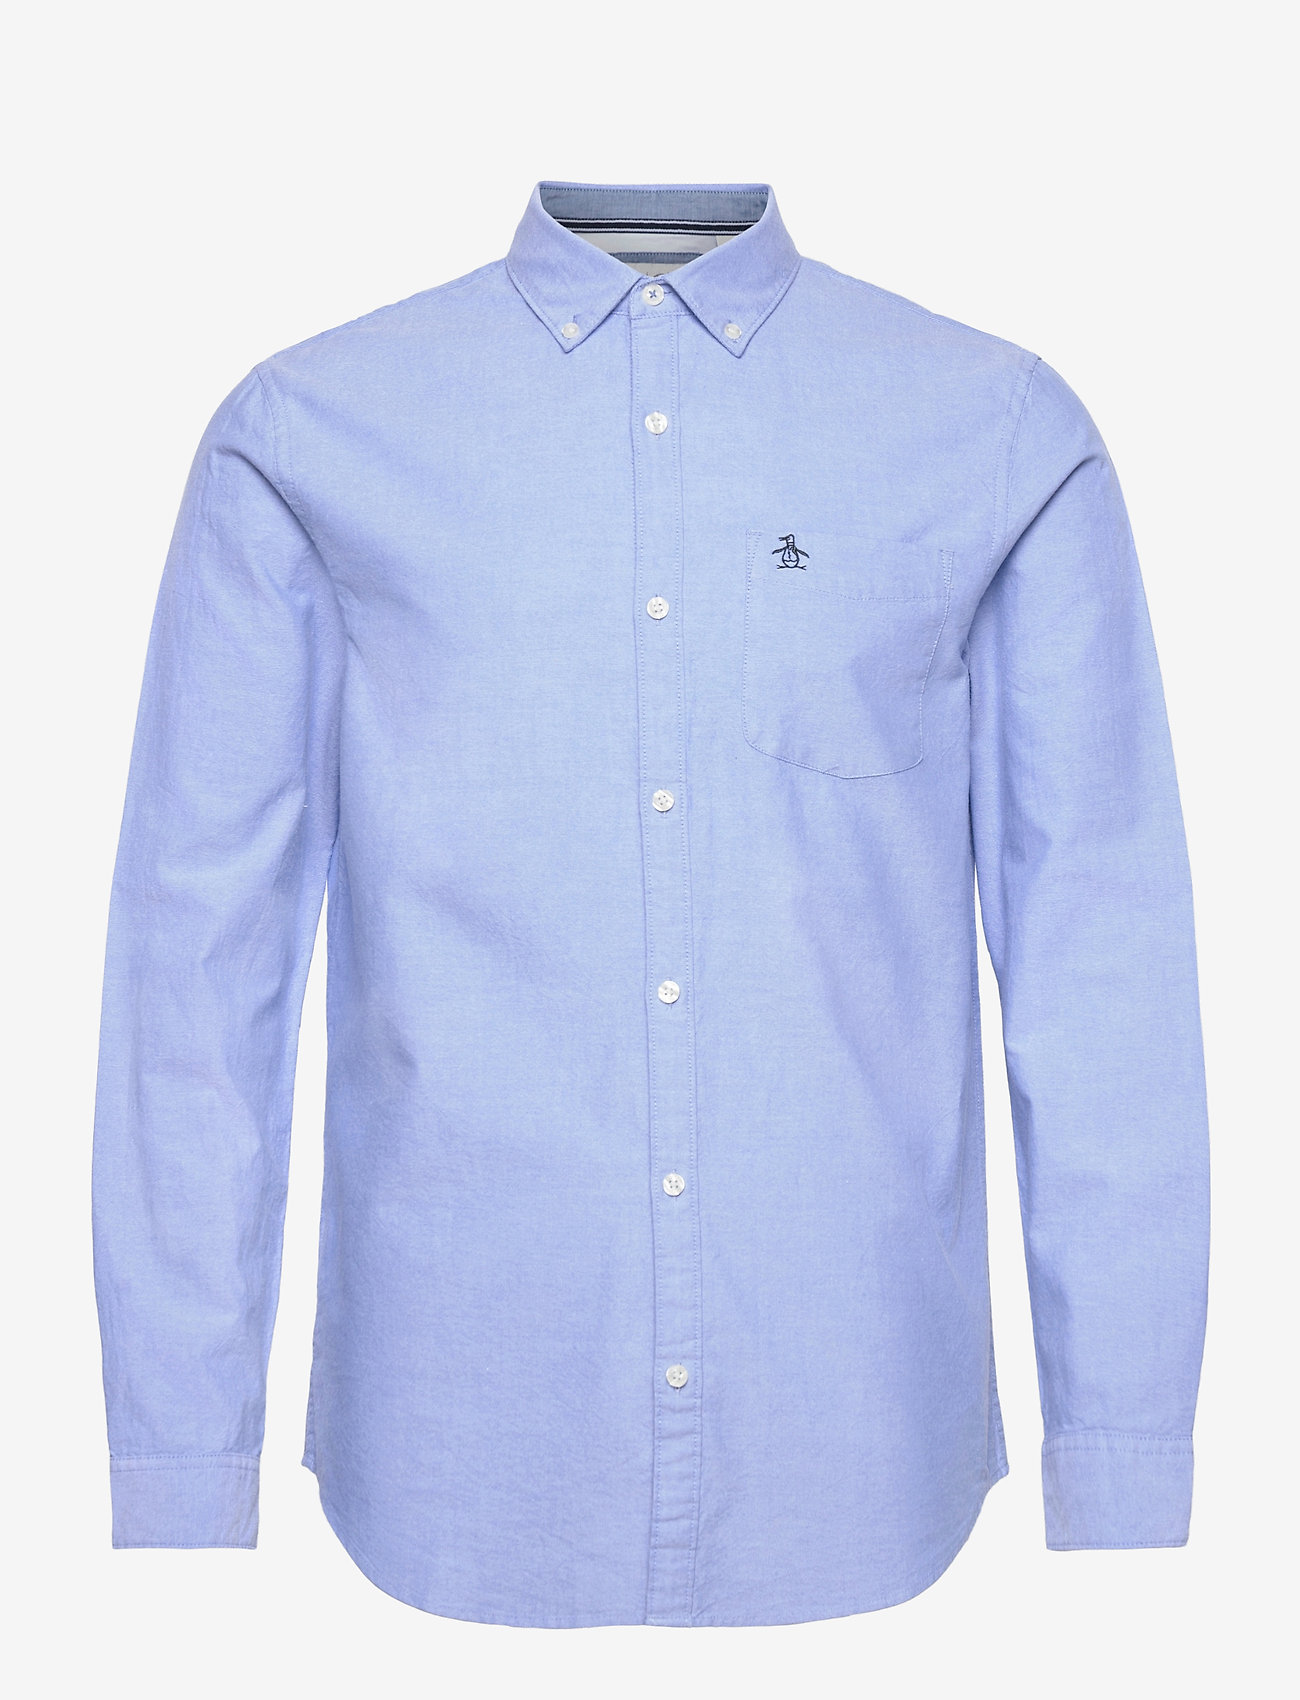 Original Penguin - Long Sleeved Cotton Oxford Shirt - amparo blue - 0